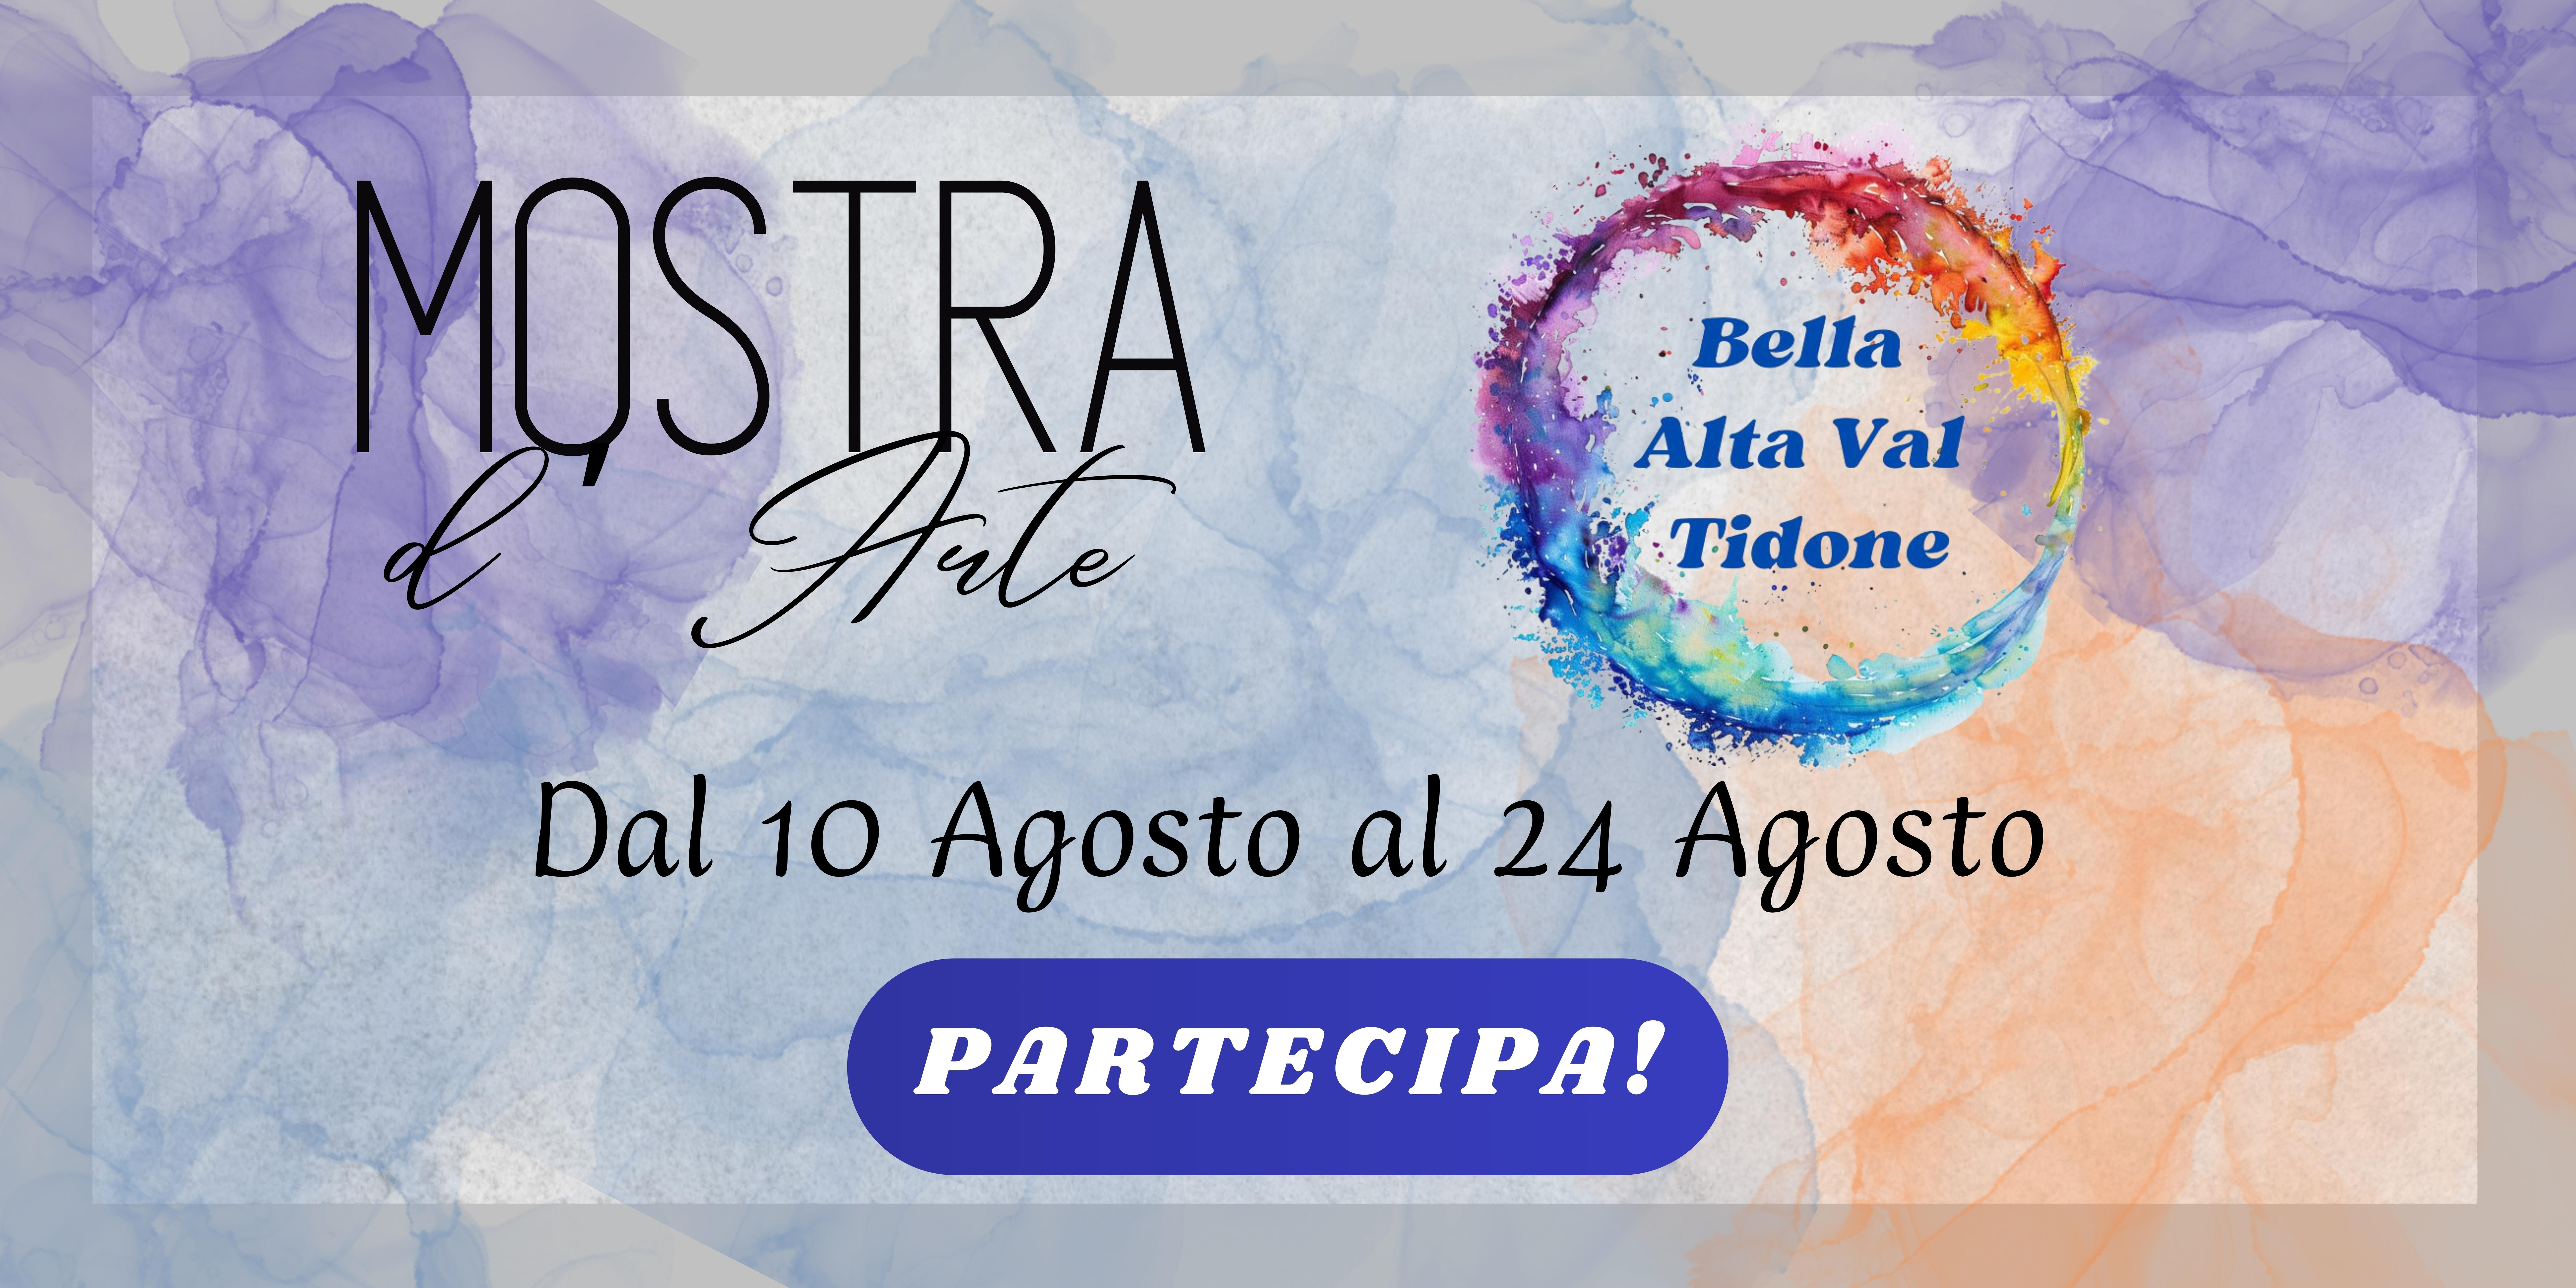 Bella Alta Val Tidone - Mostra d'arte